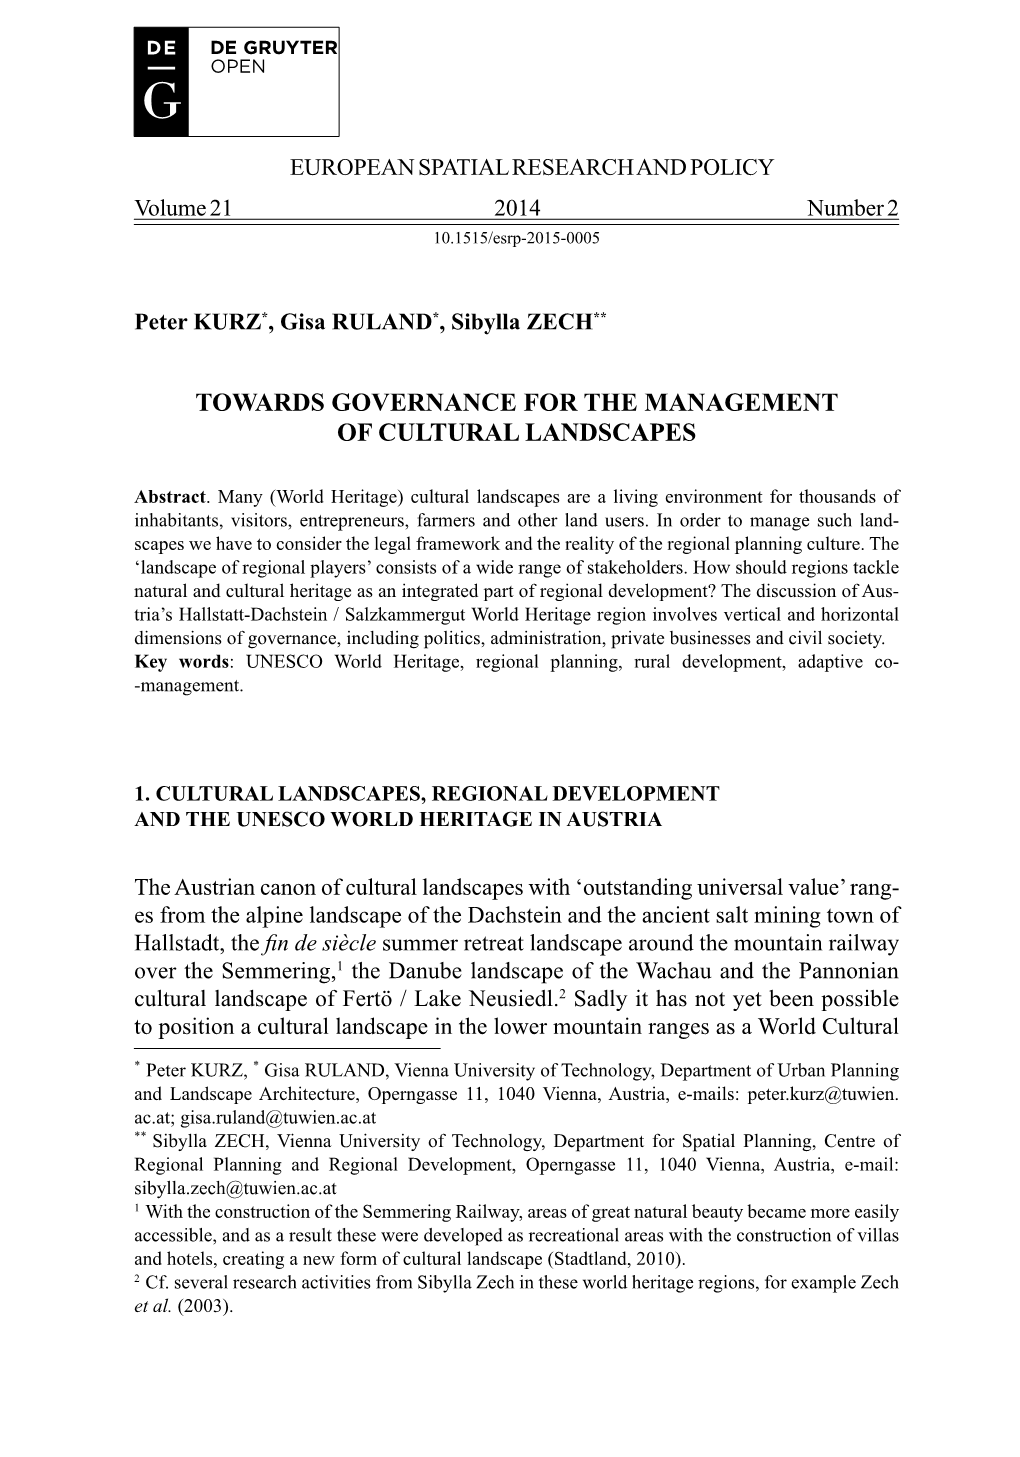 Towards Governance for the Management of Cultural Landscapes